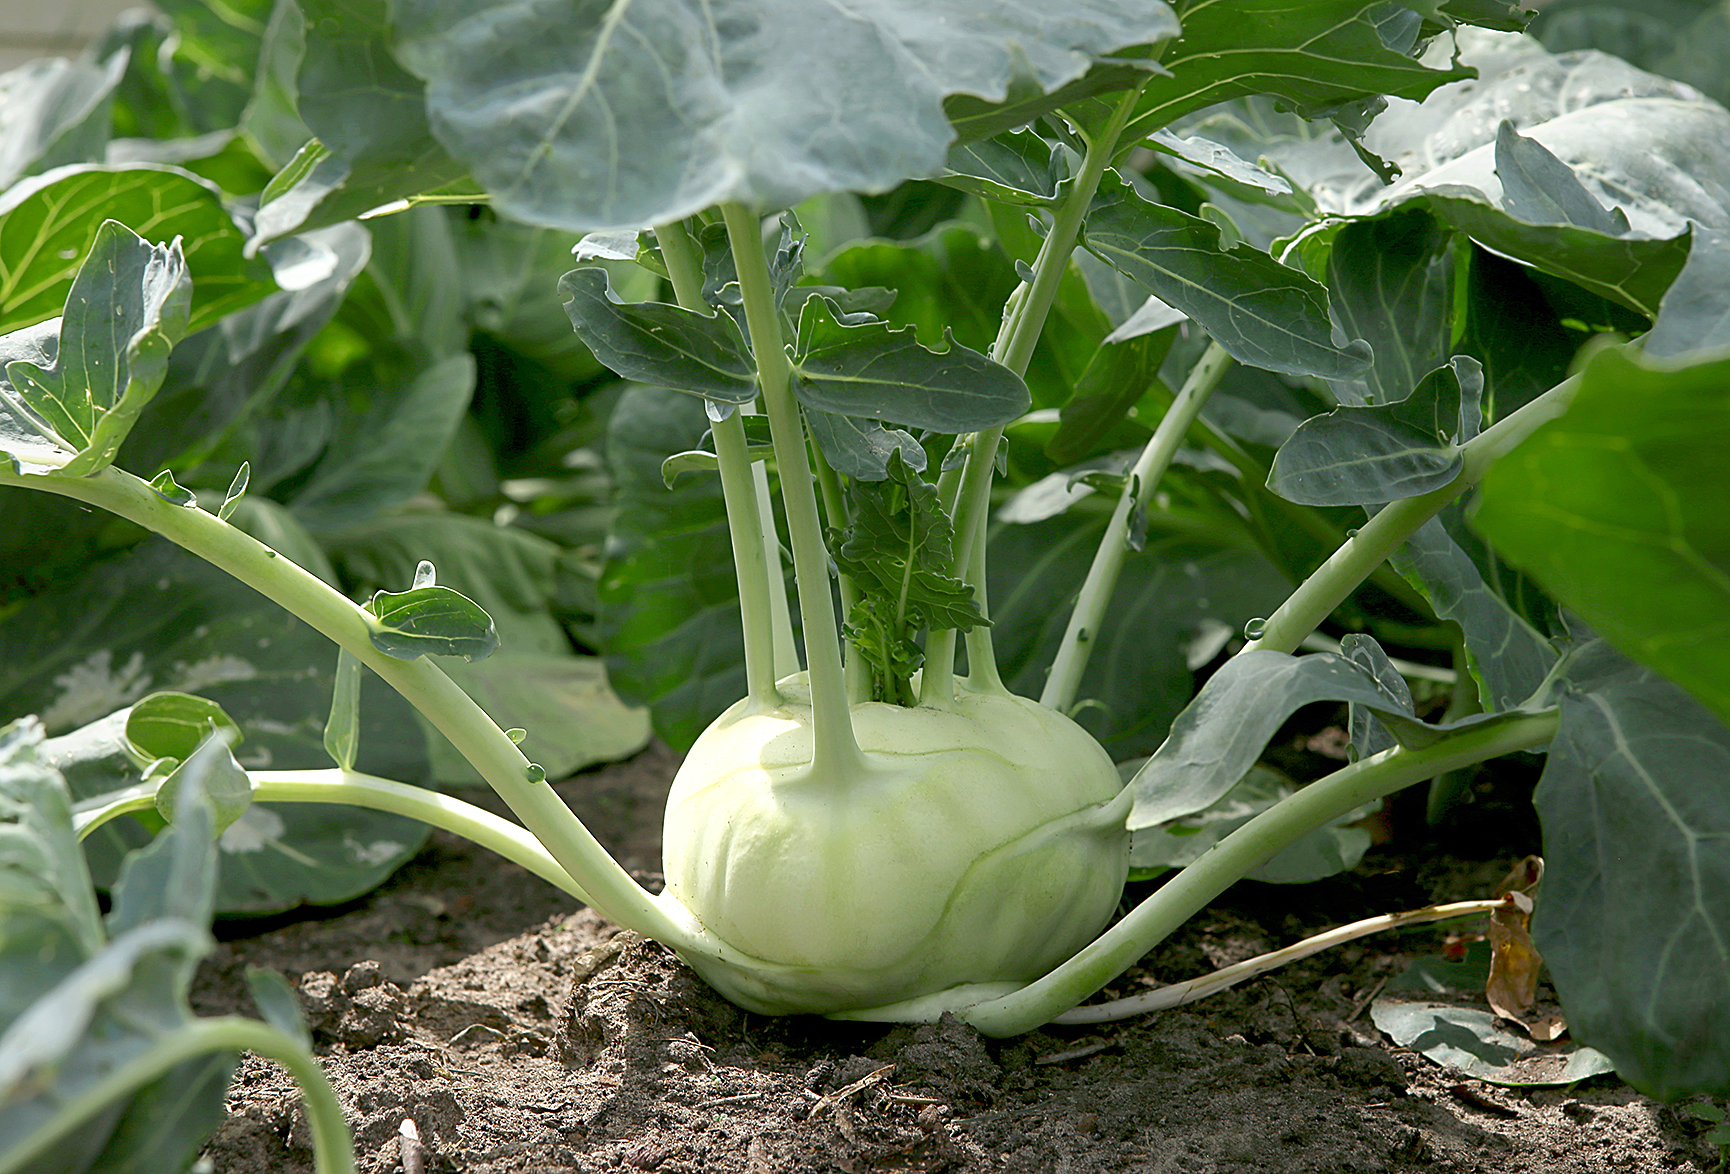 Kohlrabi cabbage growing in garden. Kohlrabi or turnip cabbage in vegetable bed.